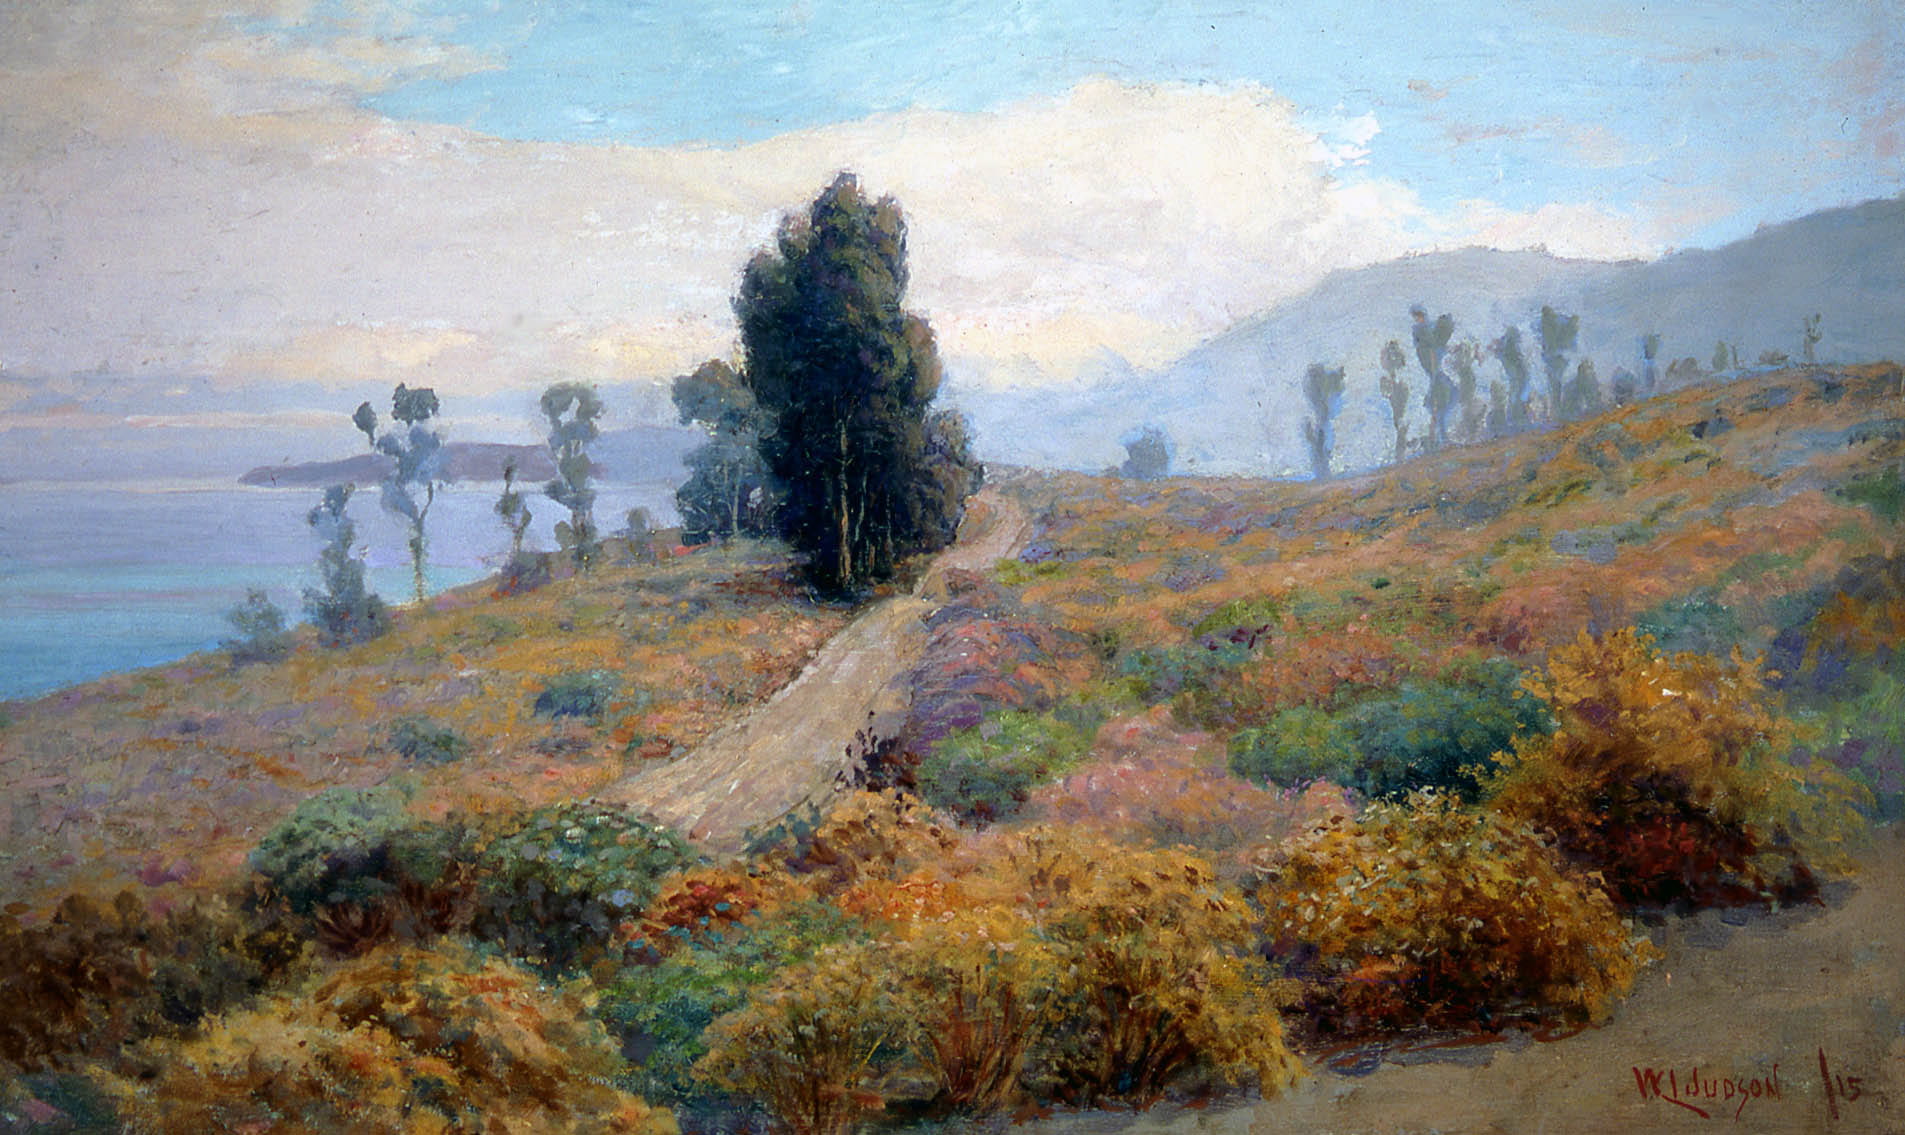 "Hills at Laguna Beach" by William Lees Judson